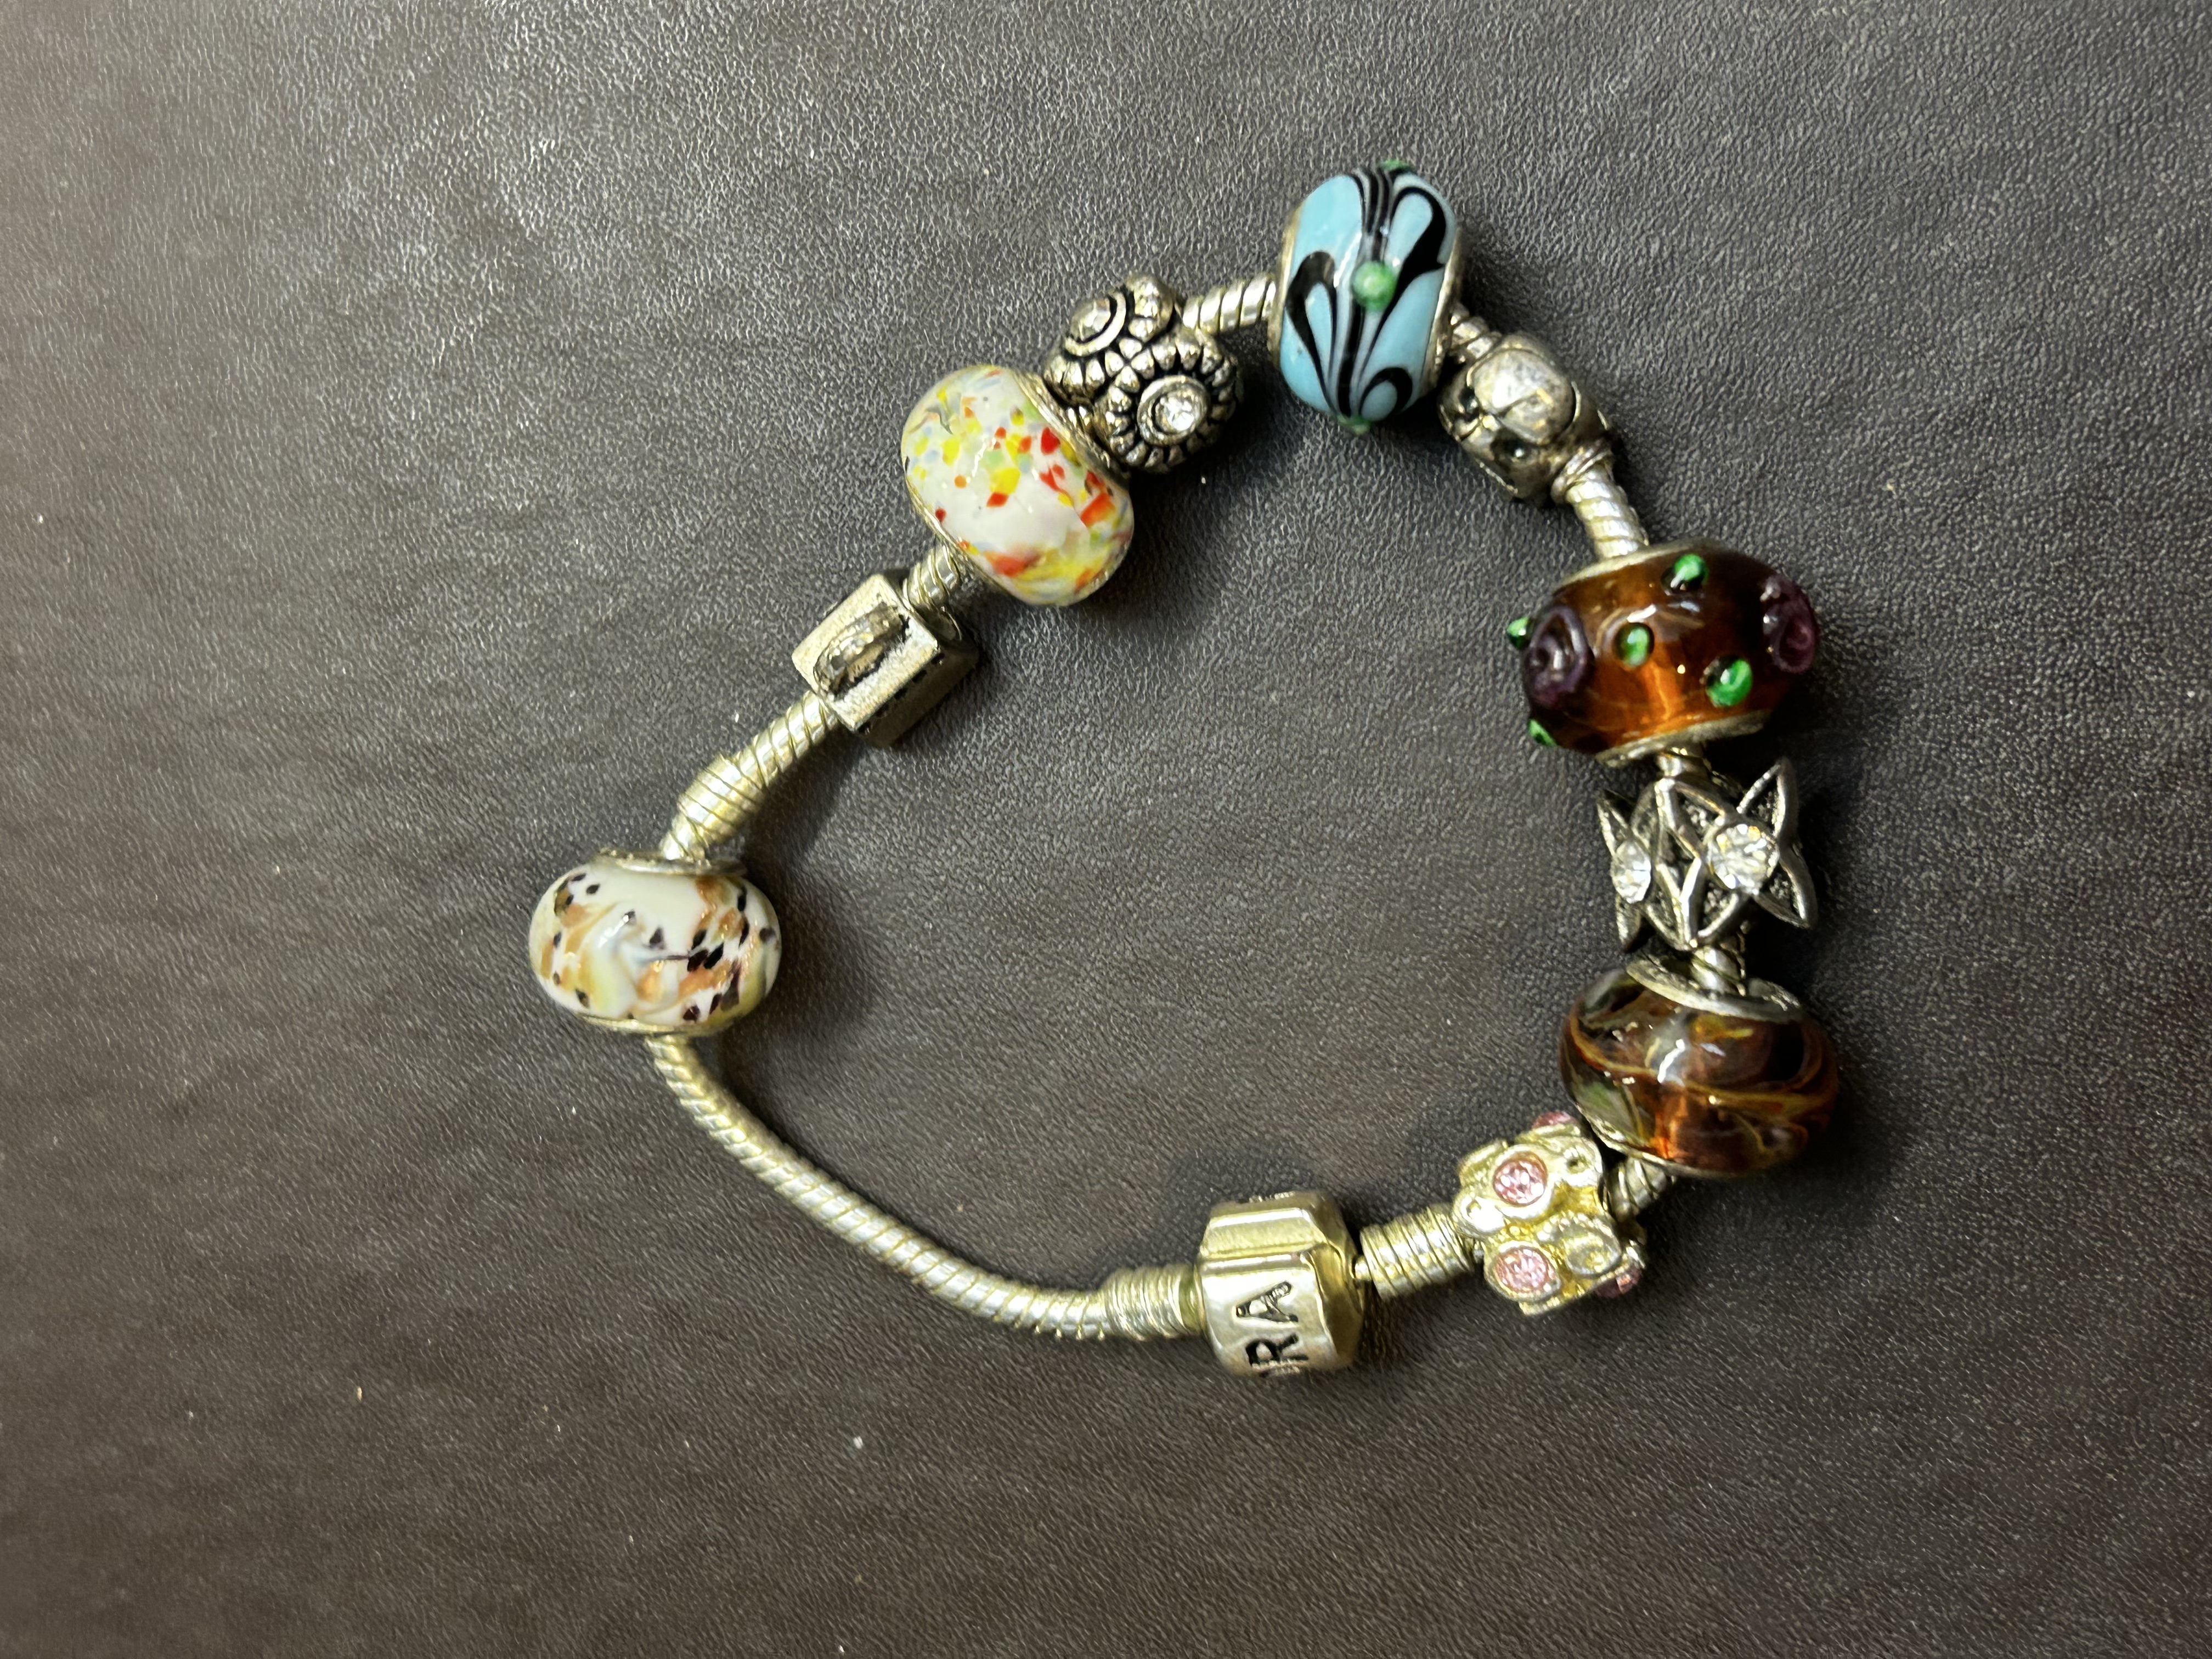 Pandora charm bracelet